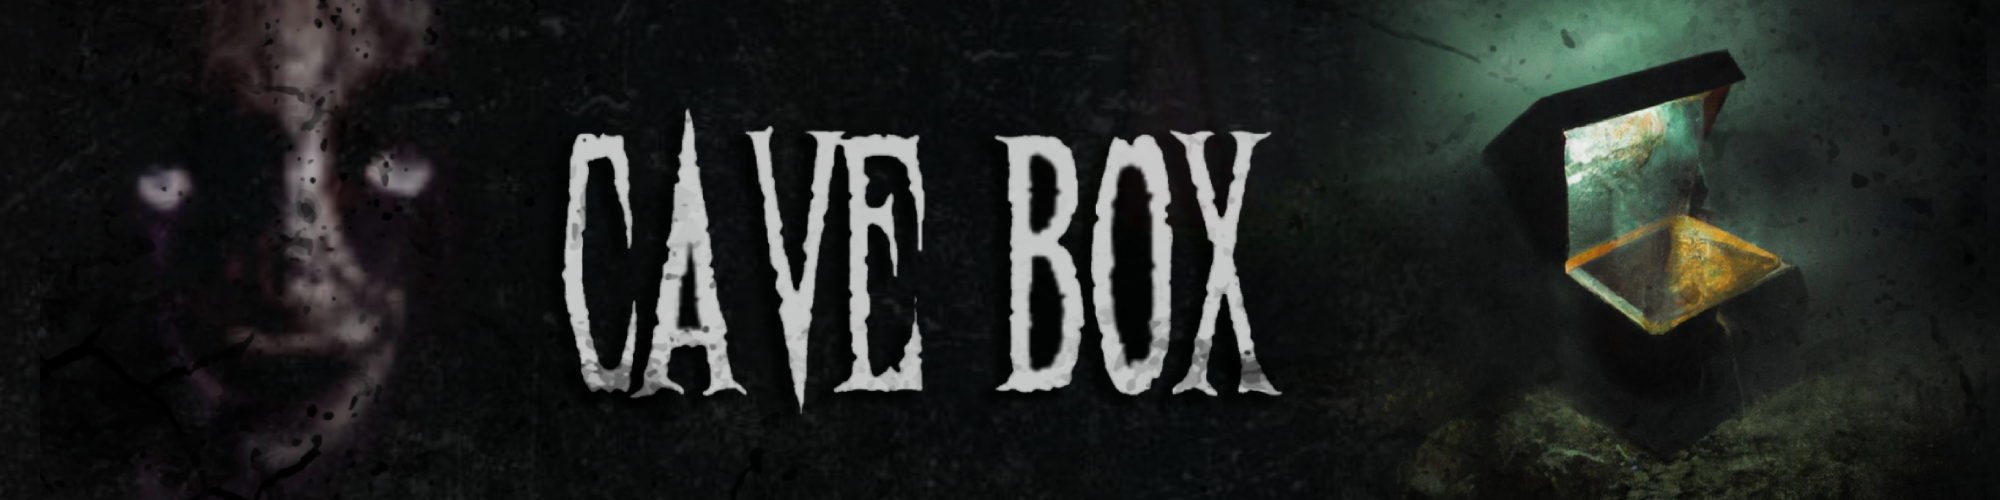 CaveBox